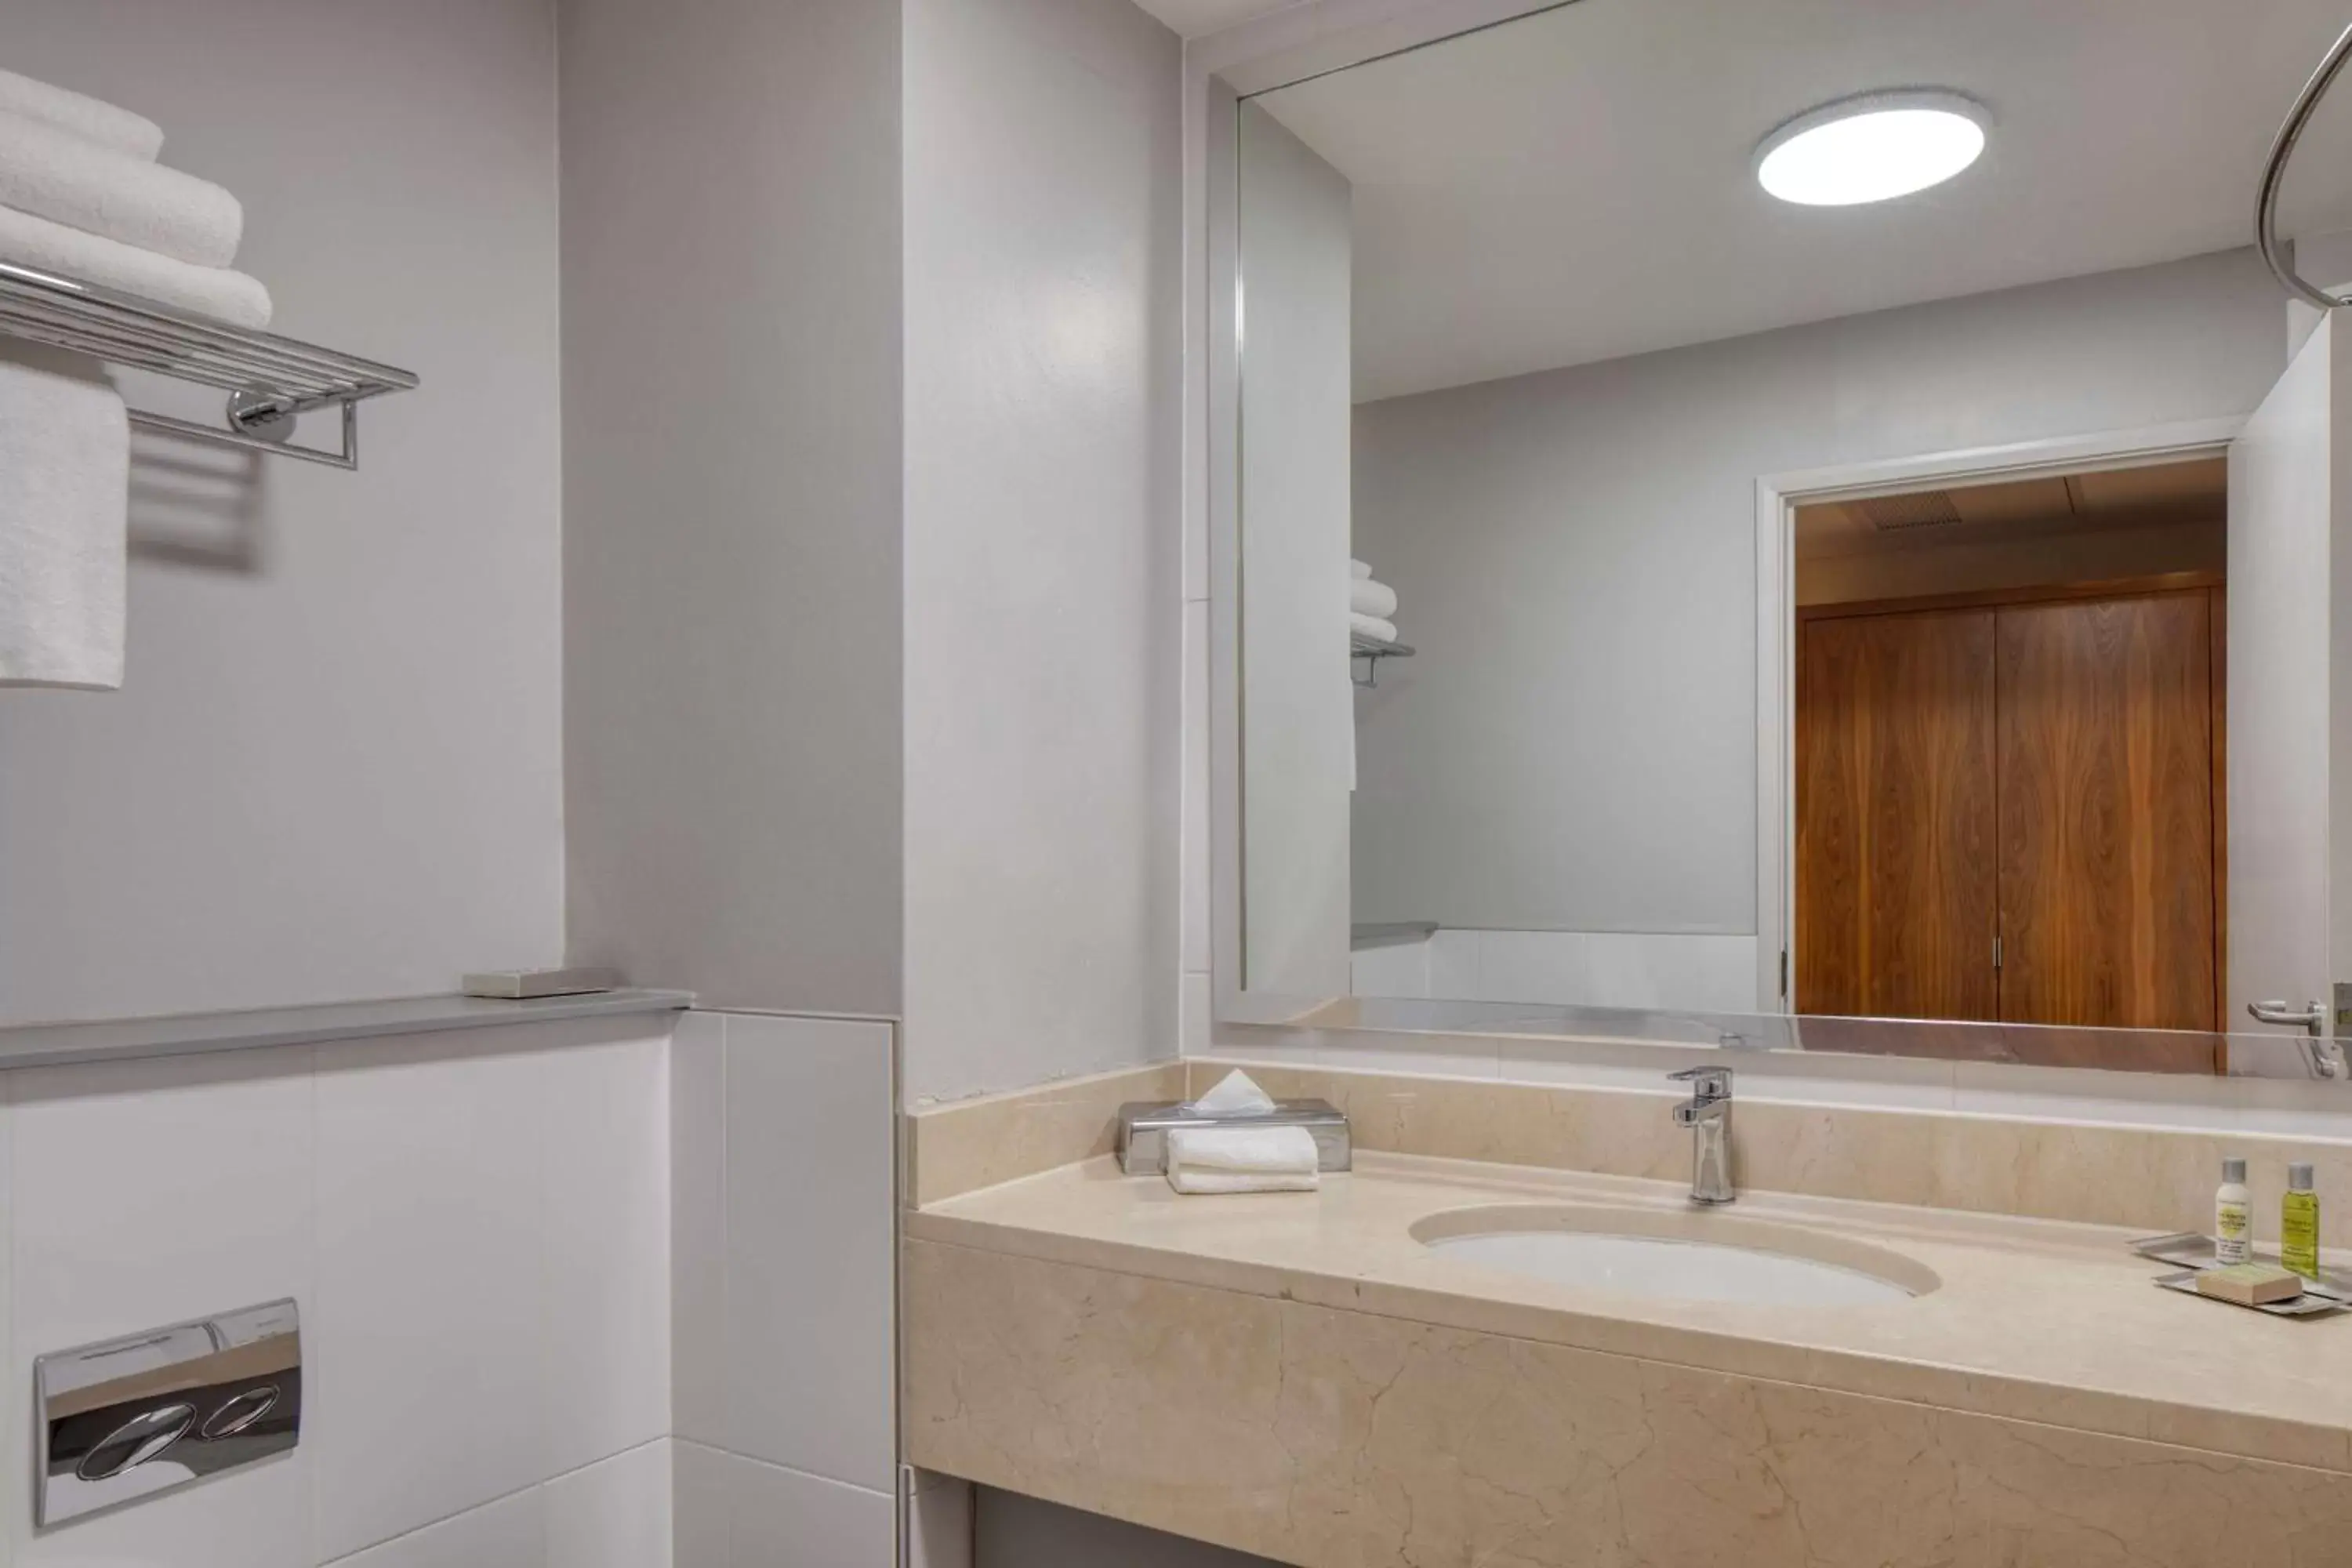 Bathroom in DoubleTree by Hilton Newbury North